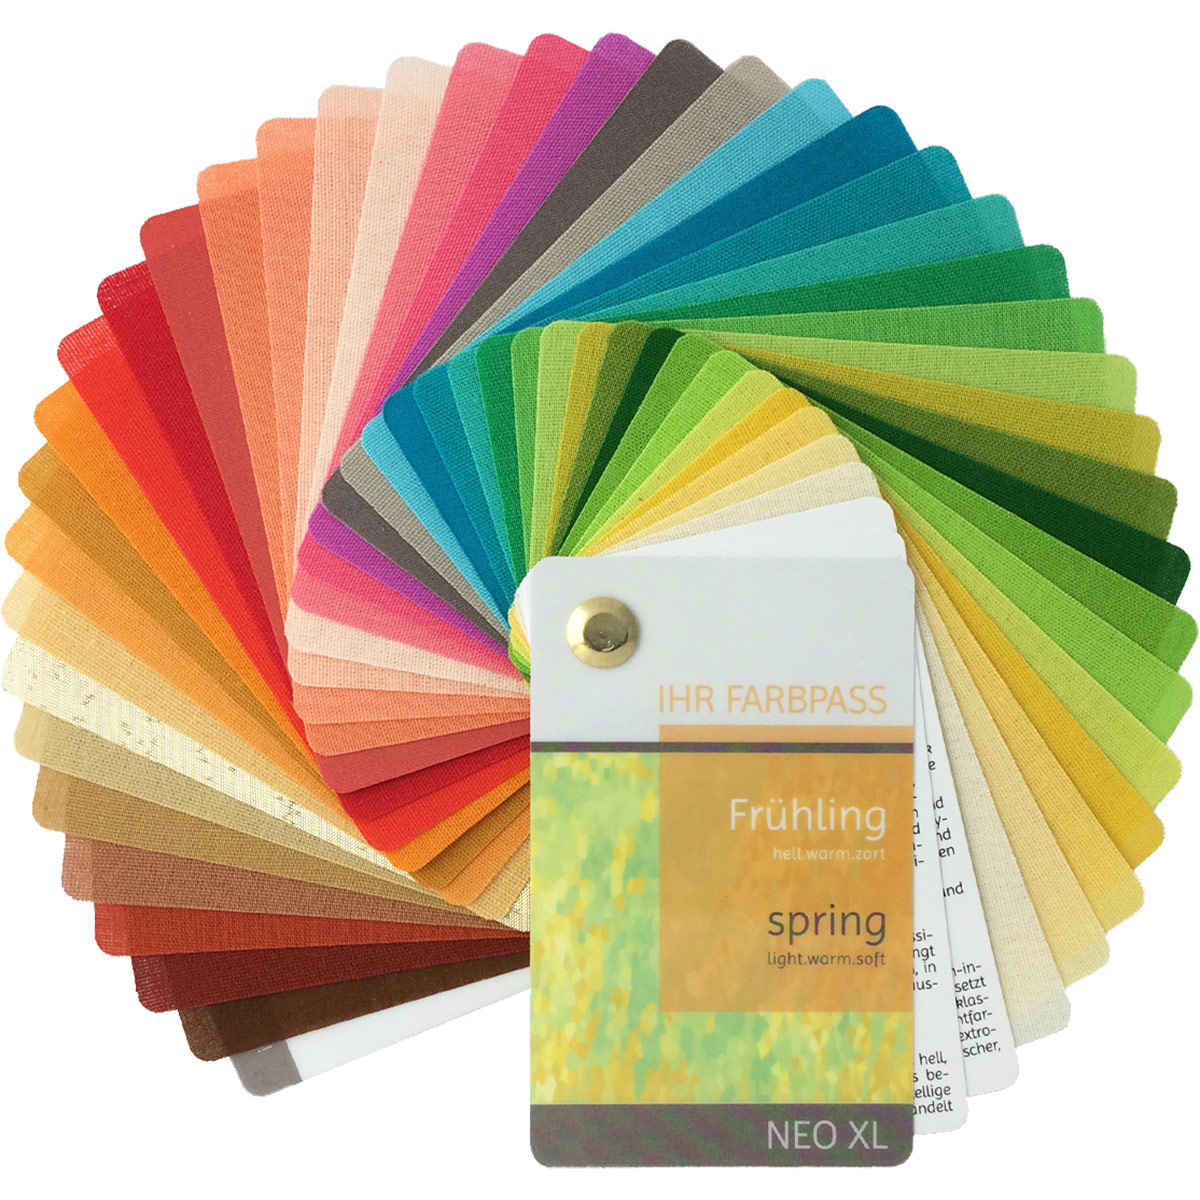 Farbpass Frühling - Neo XL, 40 Farben